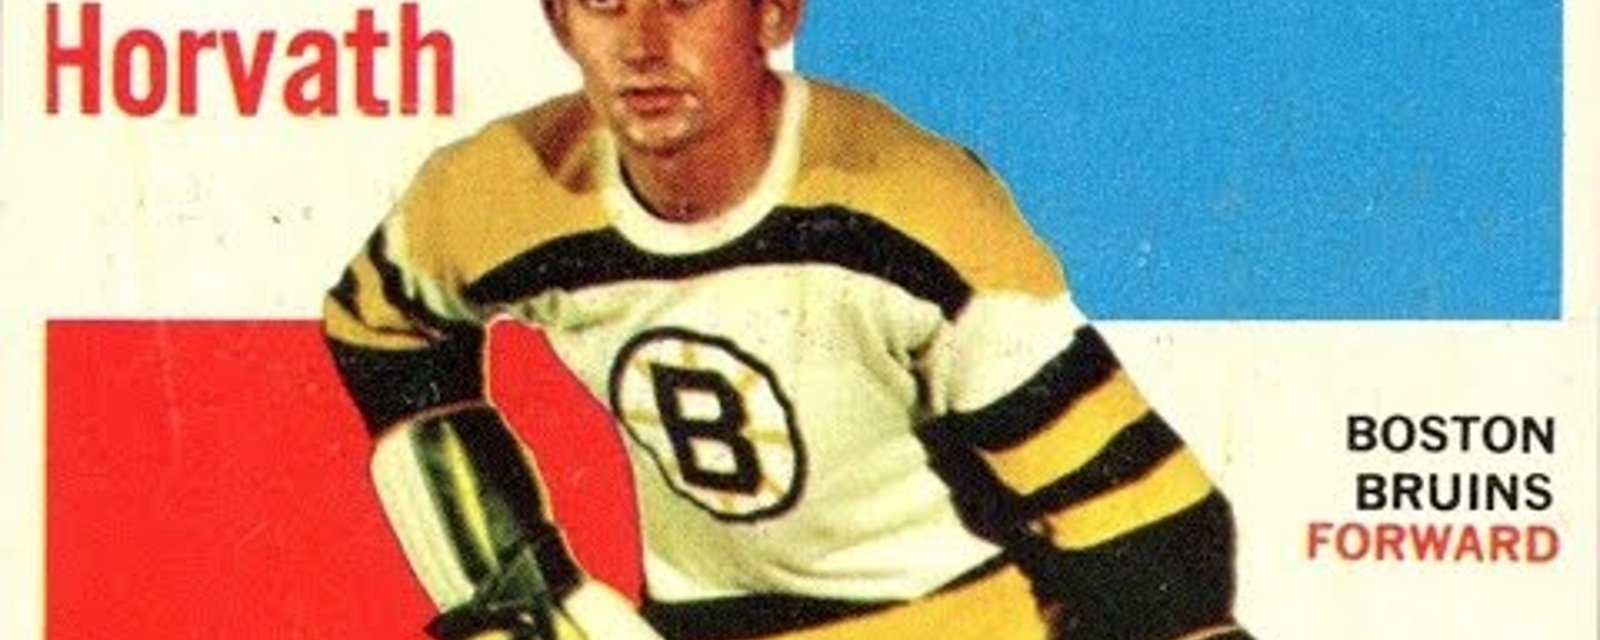 Bruins’ legend Bronco Horvath passes away